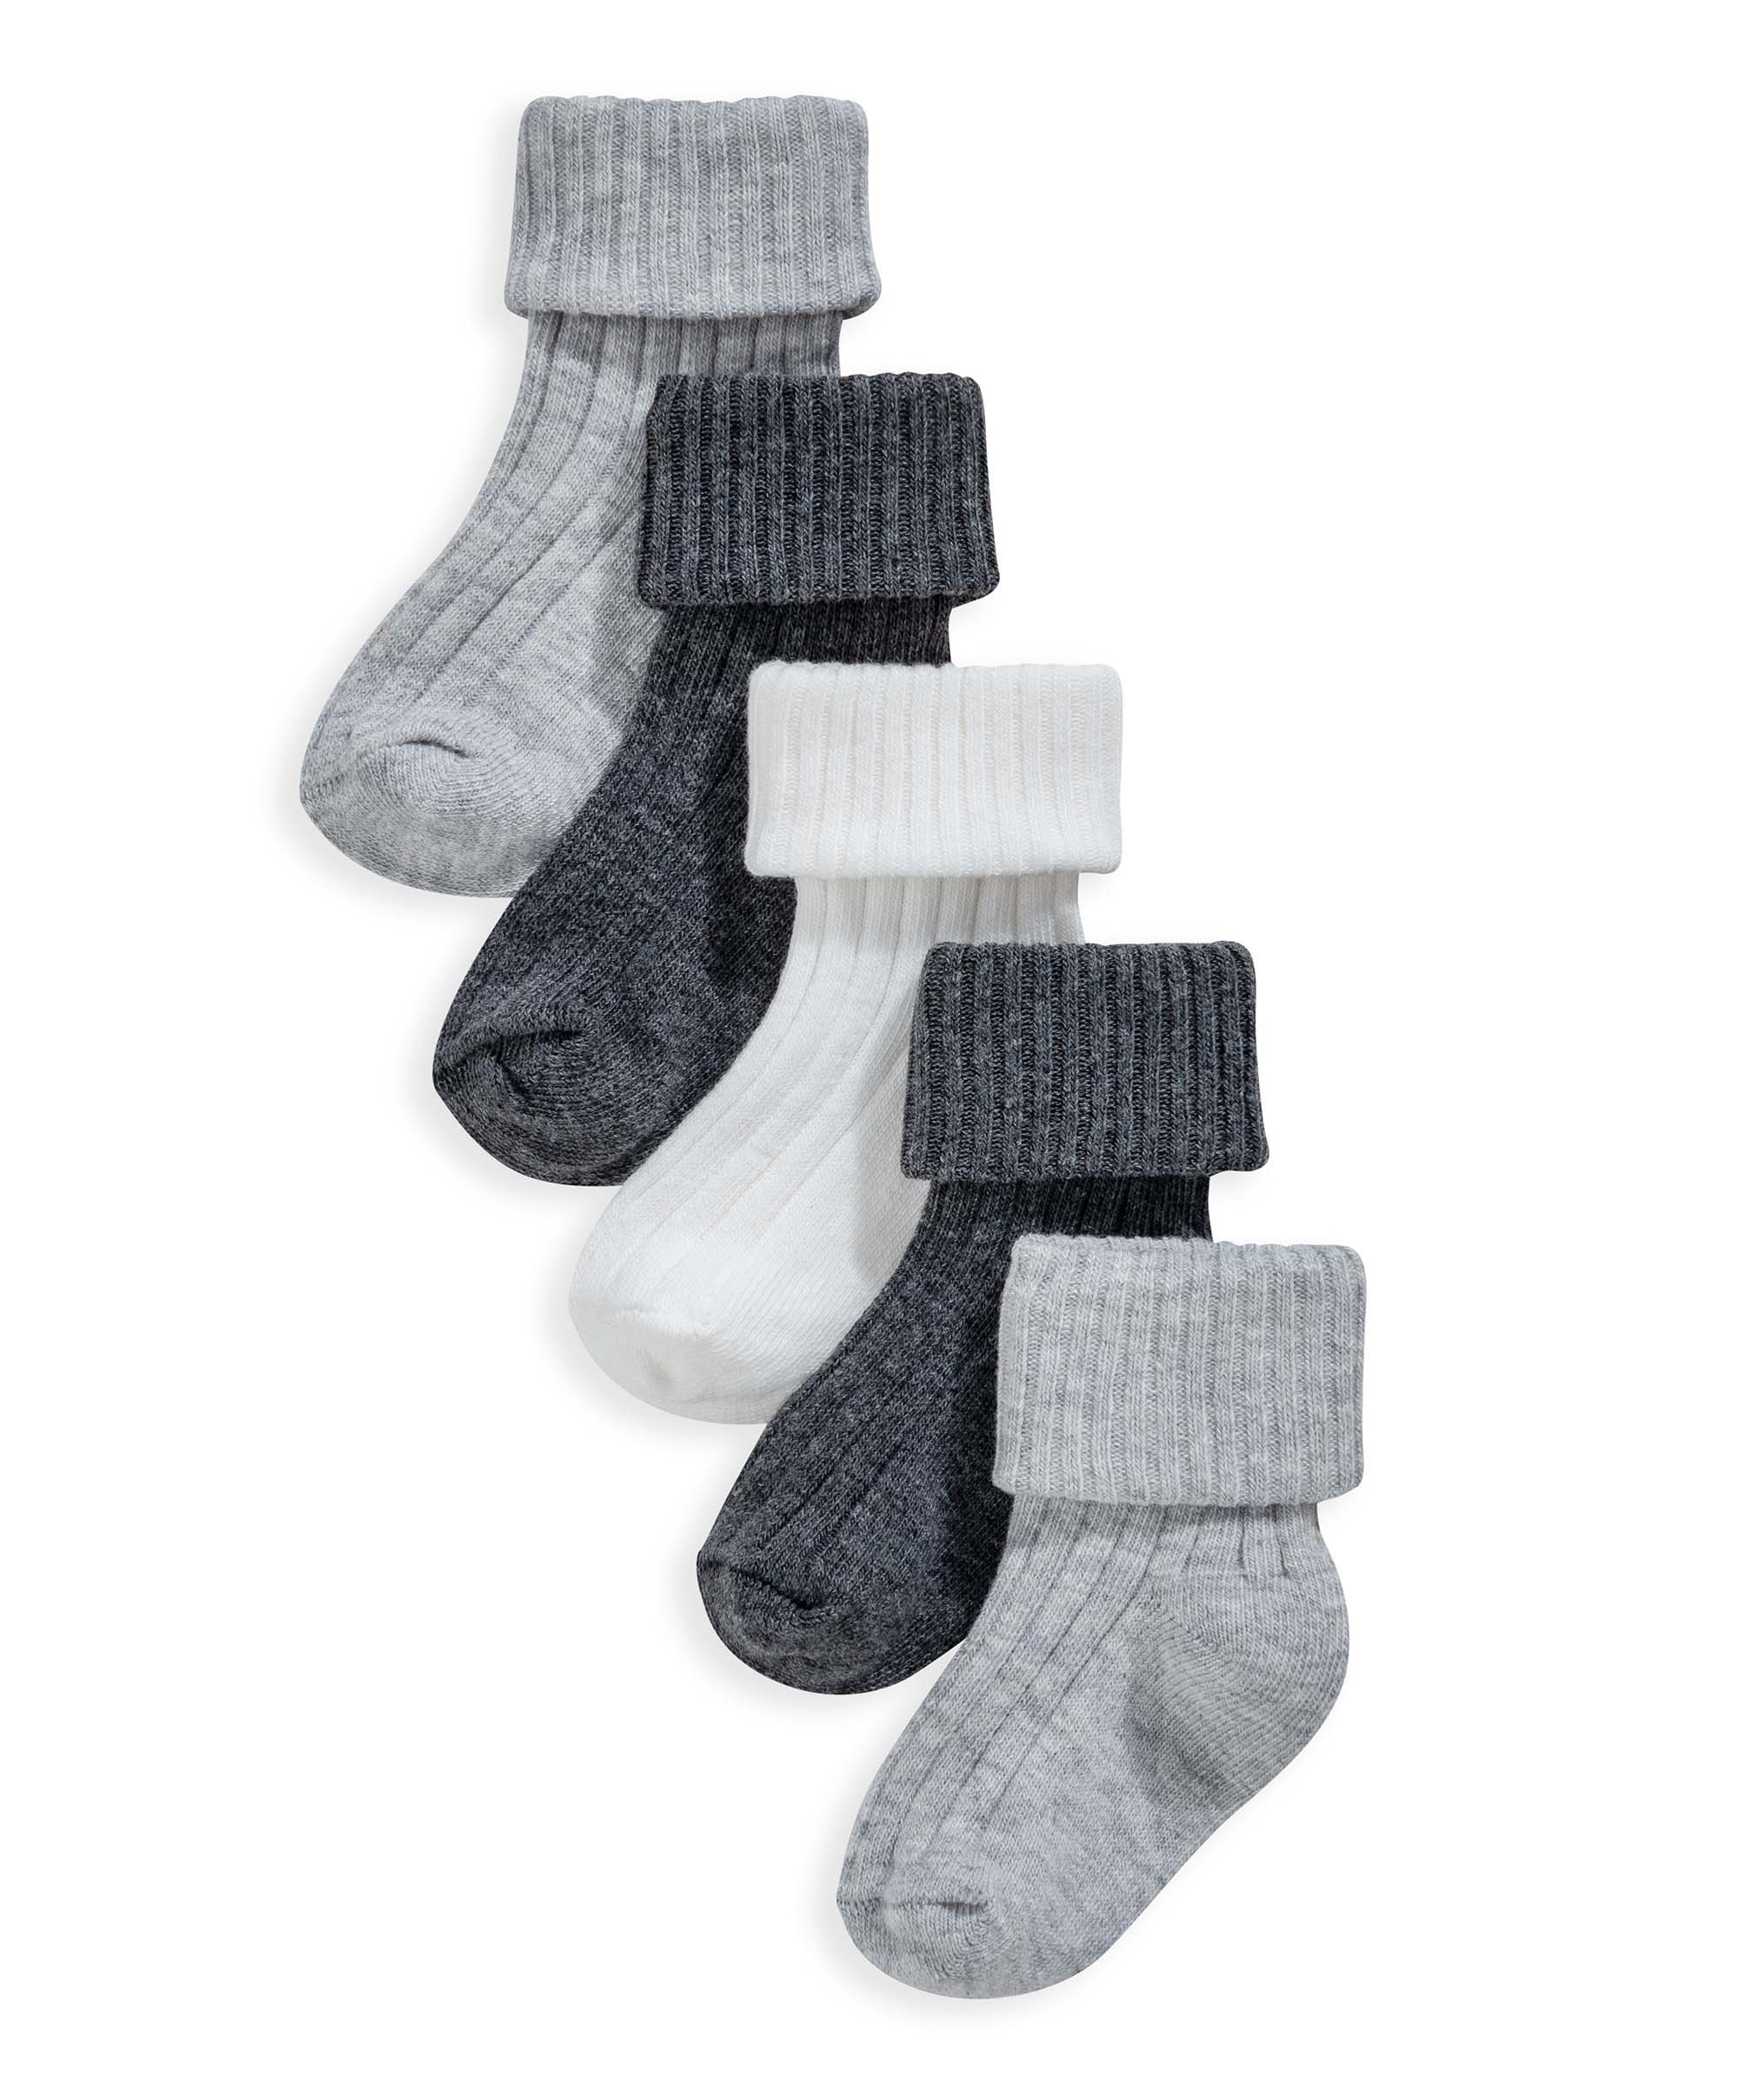 Grey Ribbed Socks Multipack - Set of 5